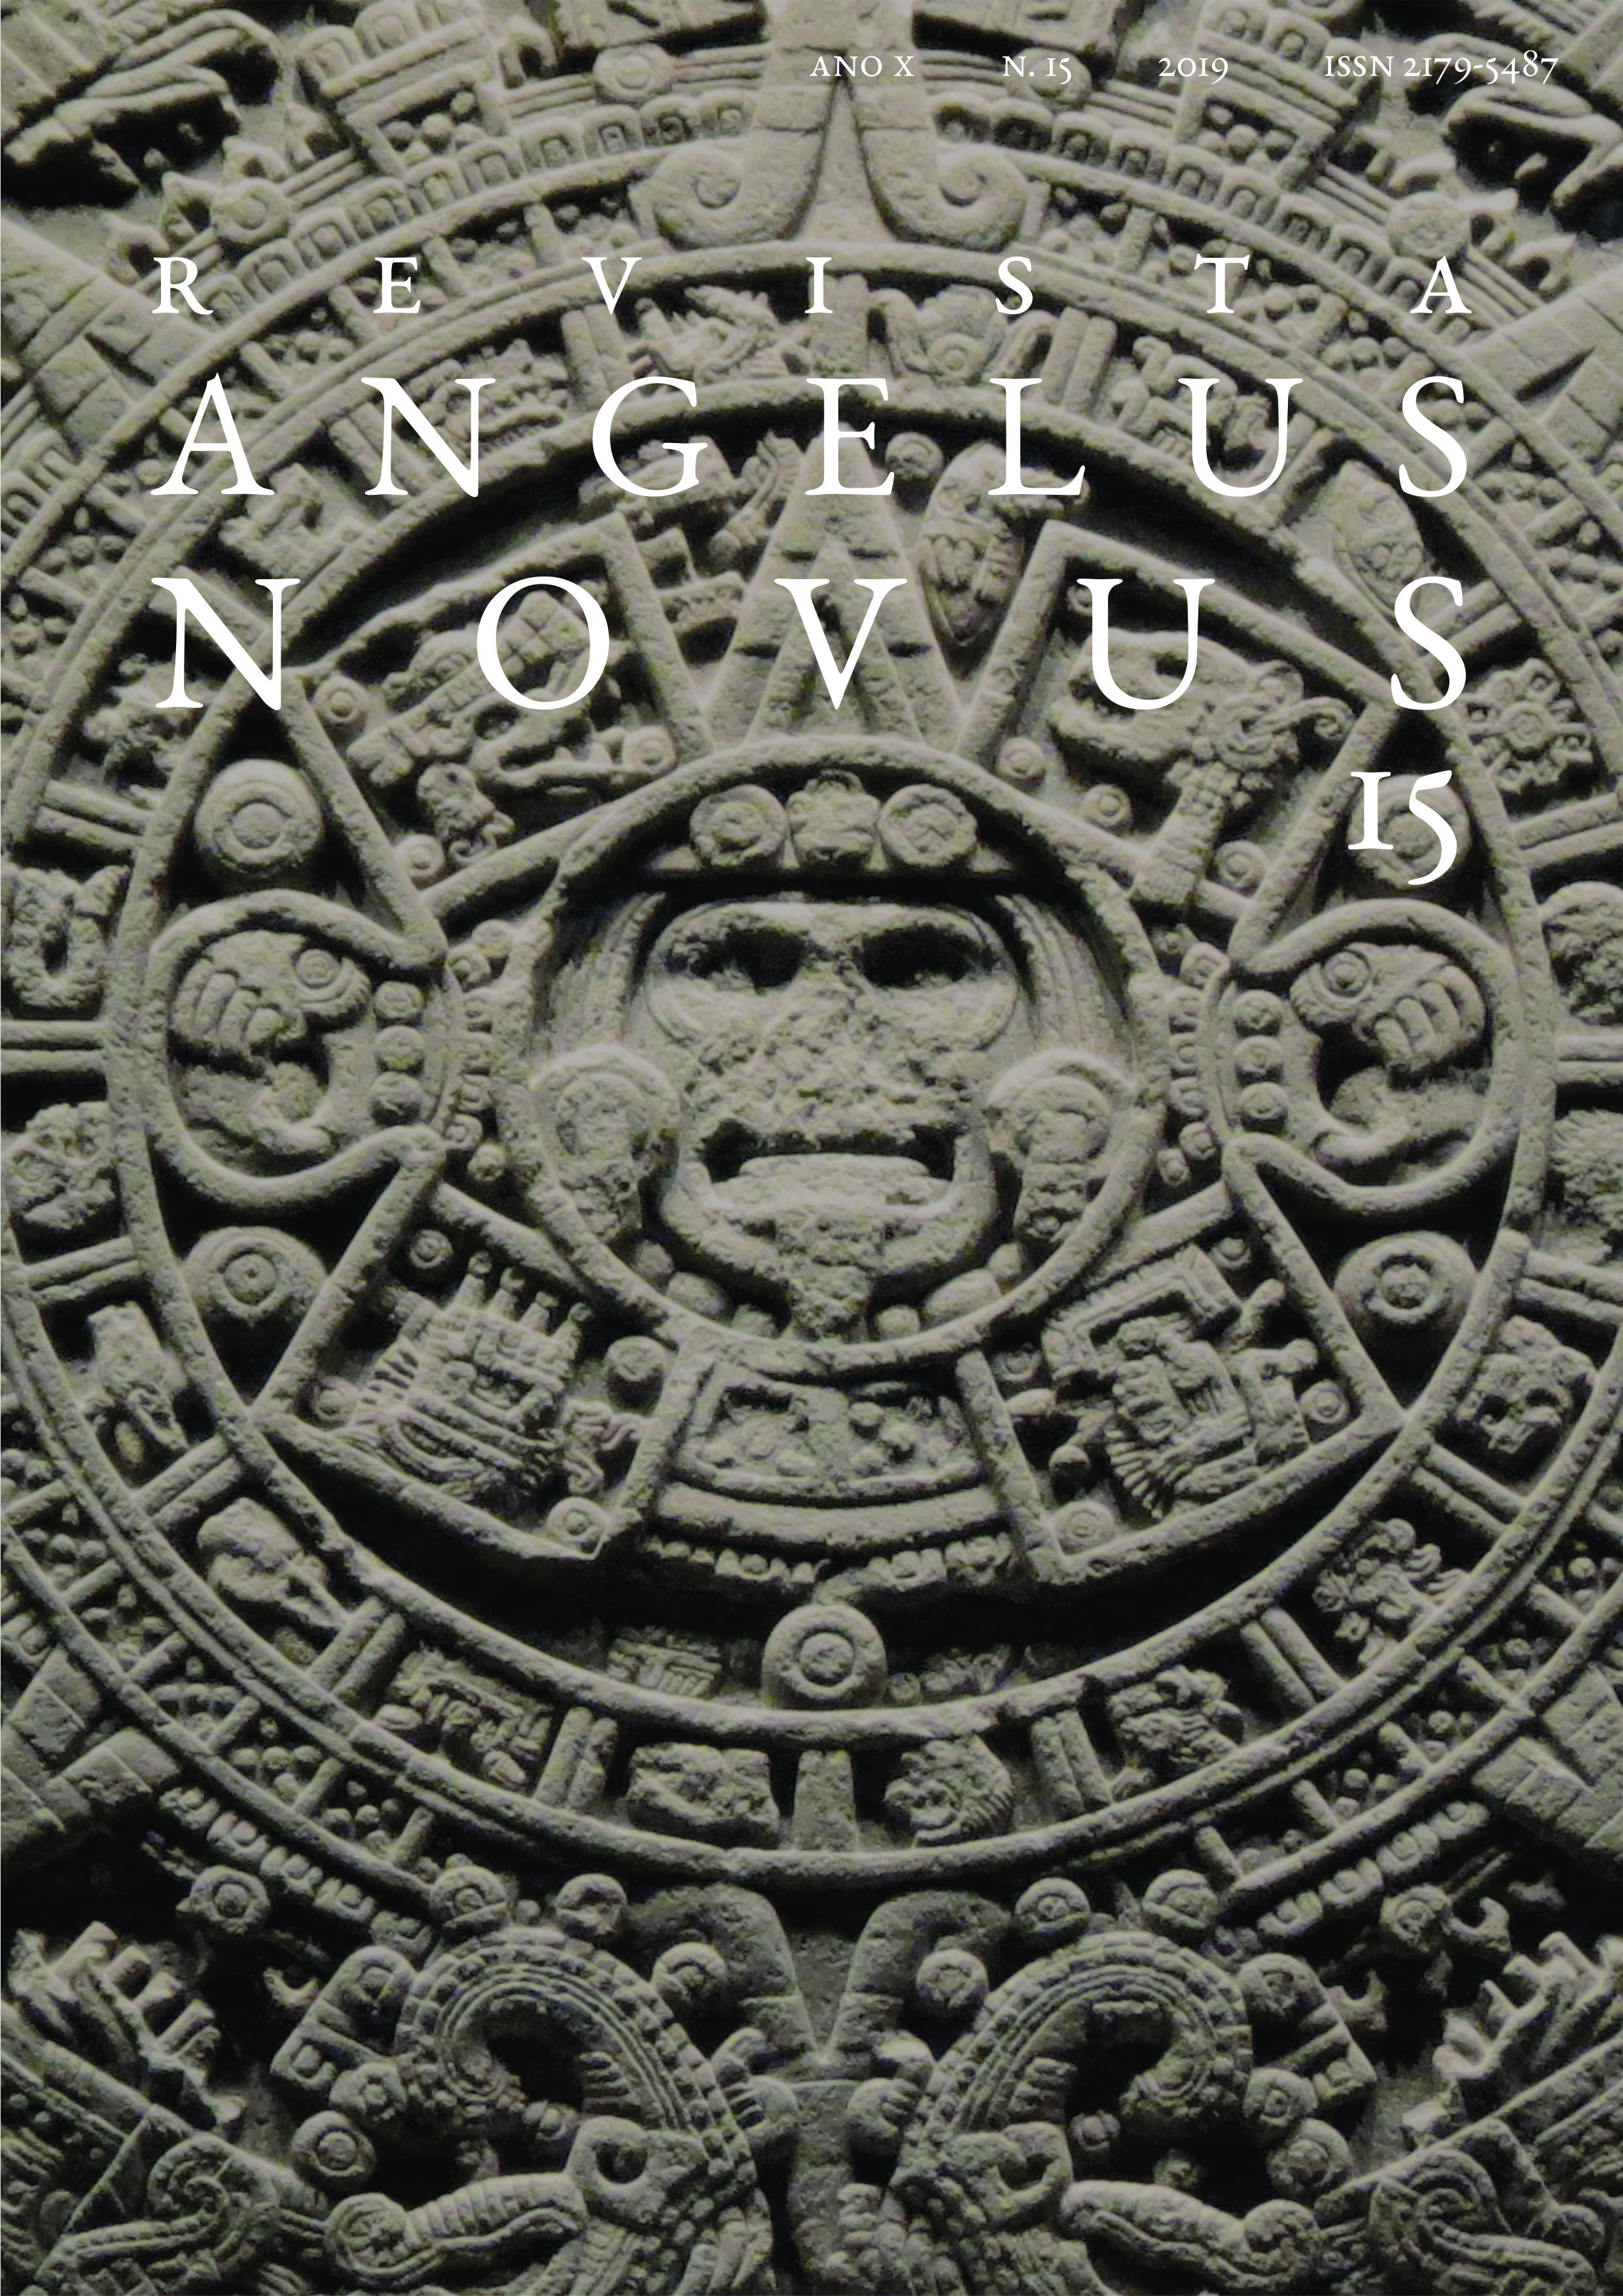 					Visualizar n. 15 (2019): Revista Angelus Novus
				